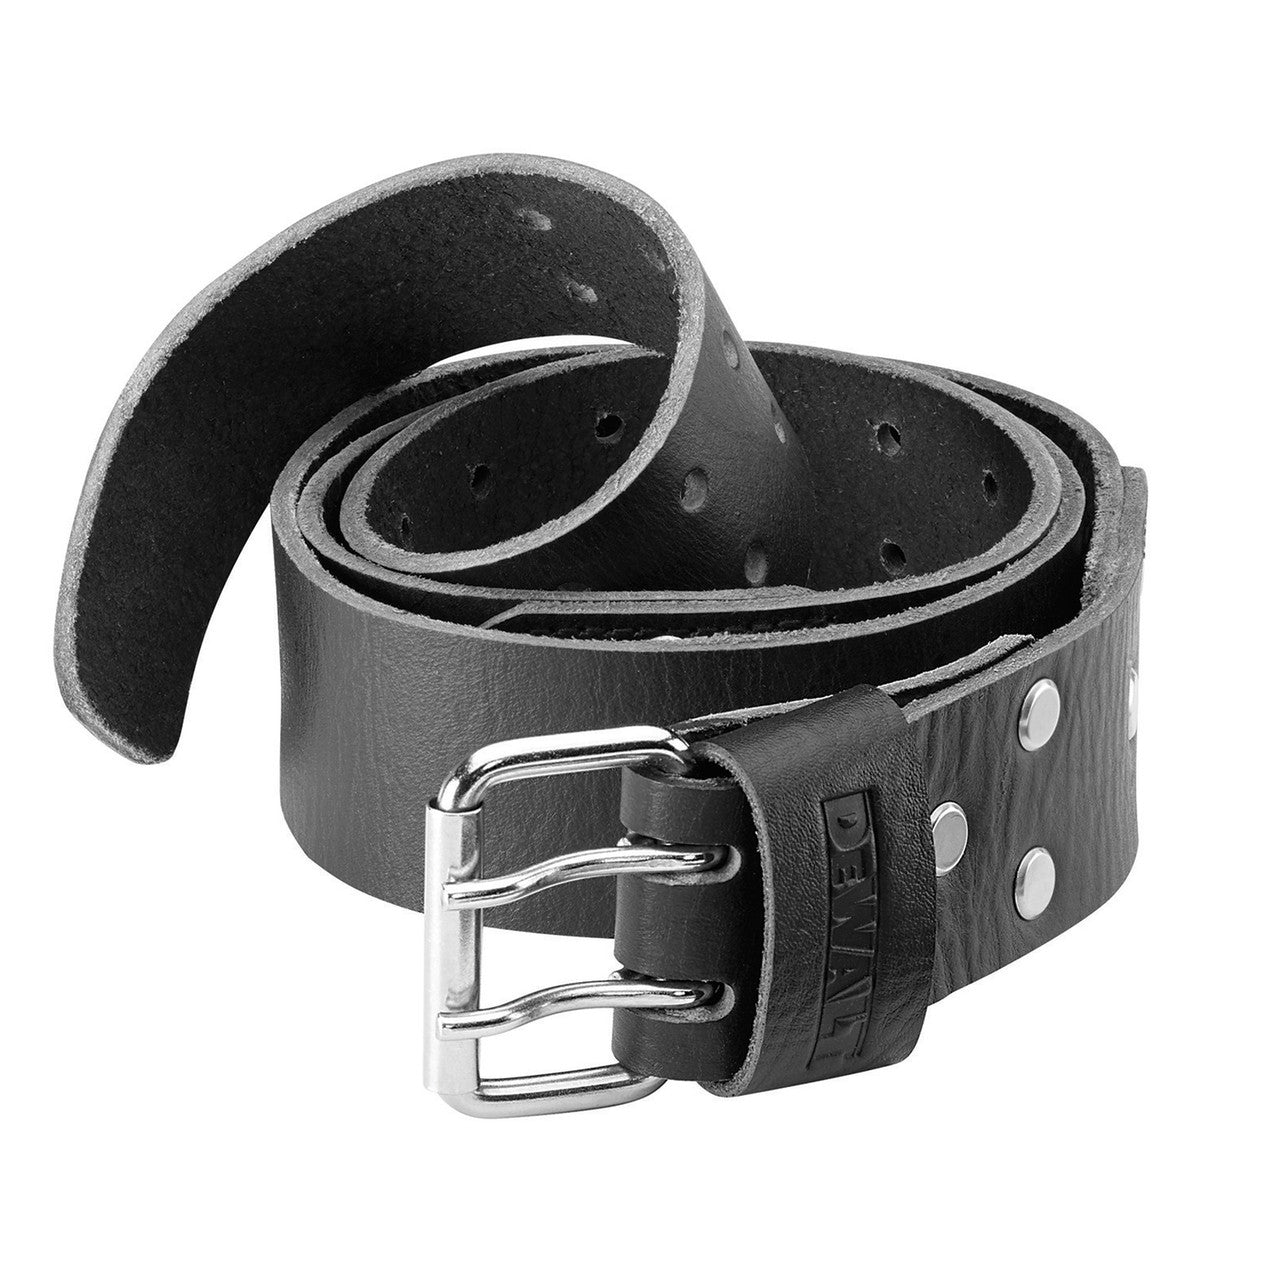 Dewalt DWST1-75661 Full Leather Belt